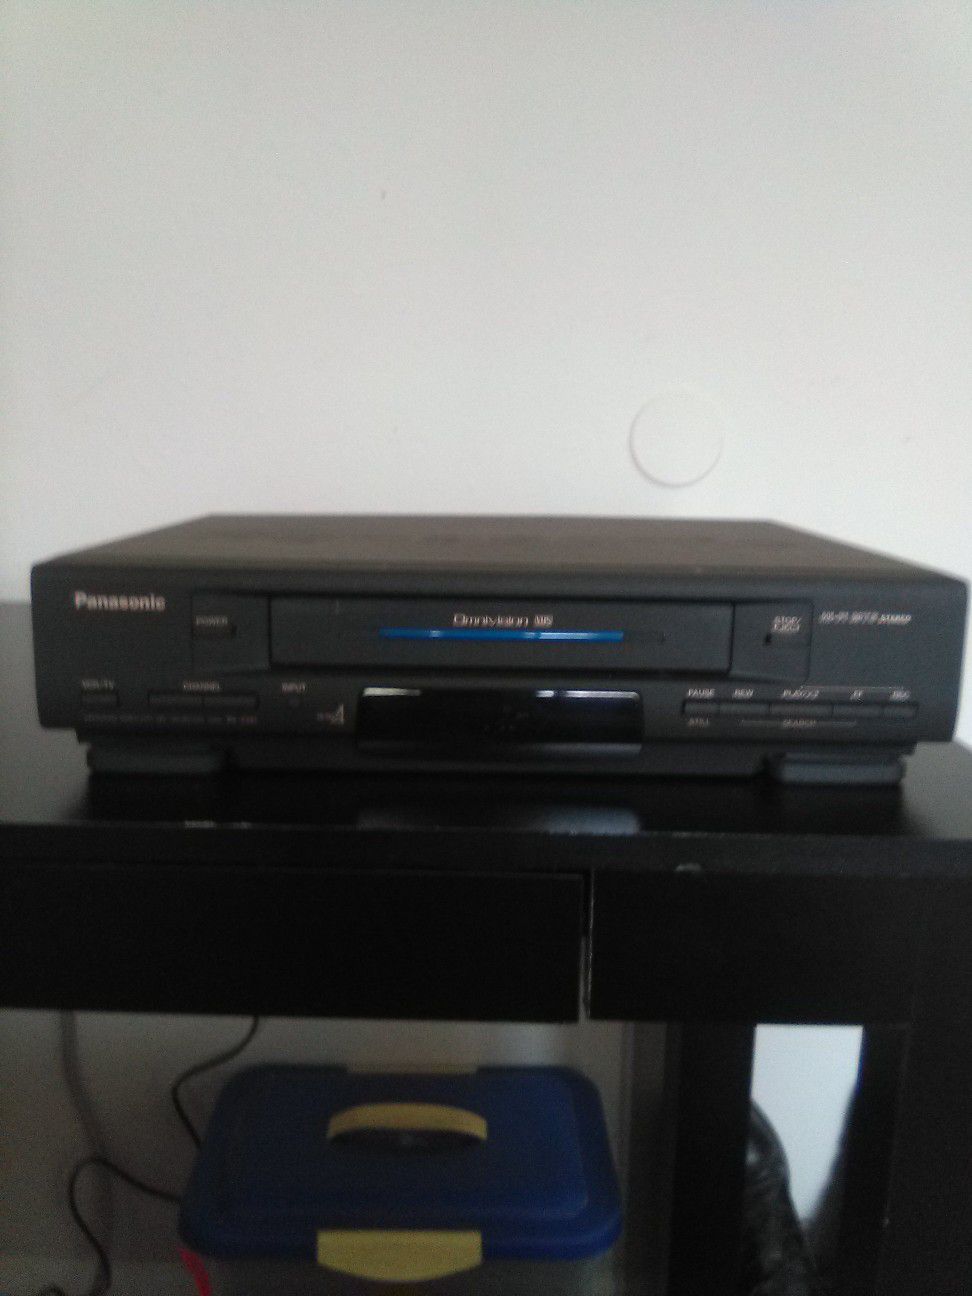 Panasonic VCR with audio/video hook-ups